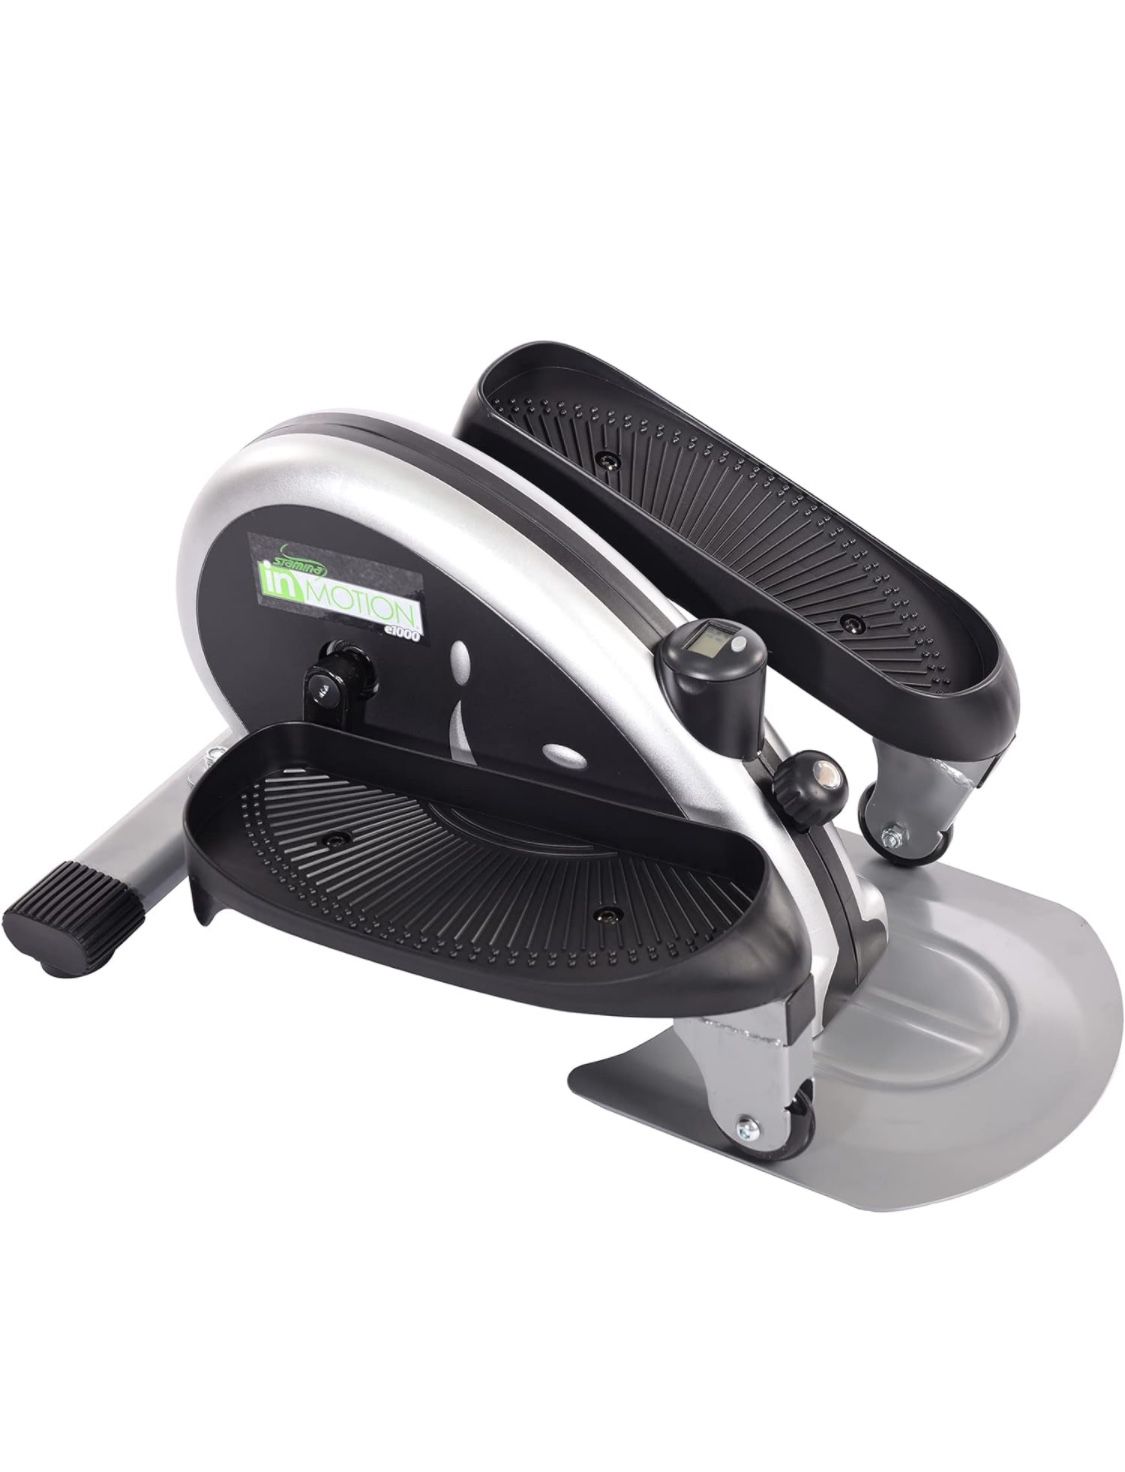 Elliptical Pedal Exerciser, Stamina InMotion Compact Strider E1000